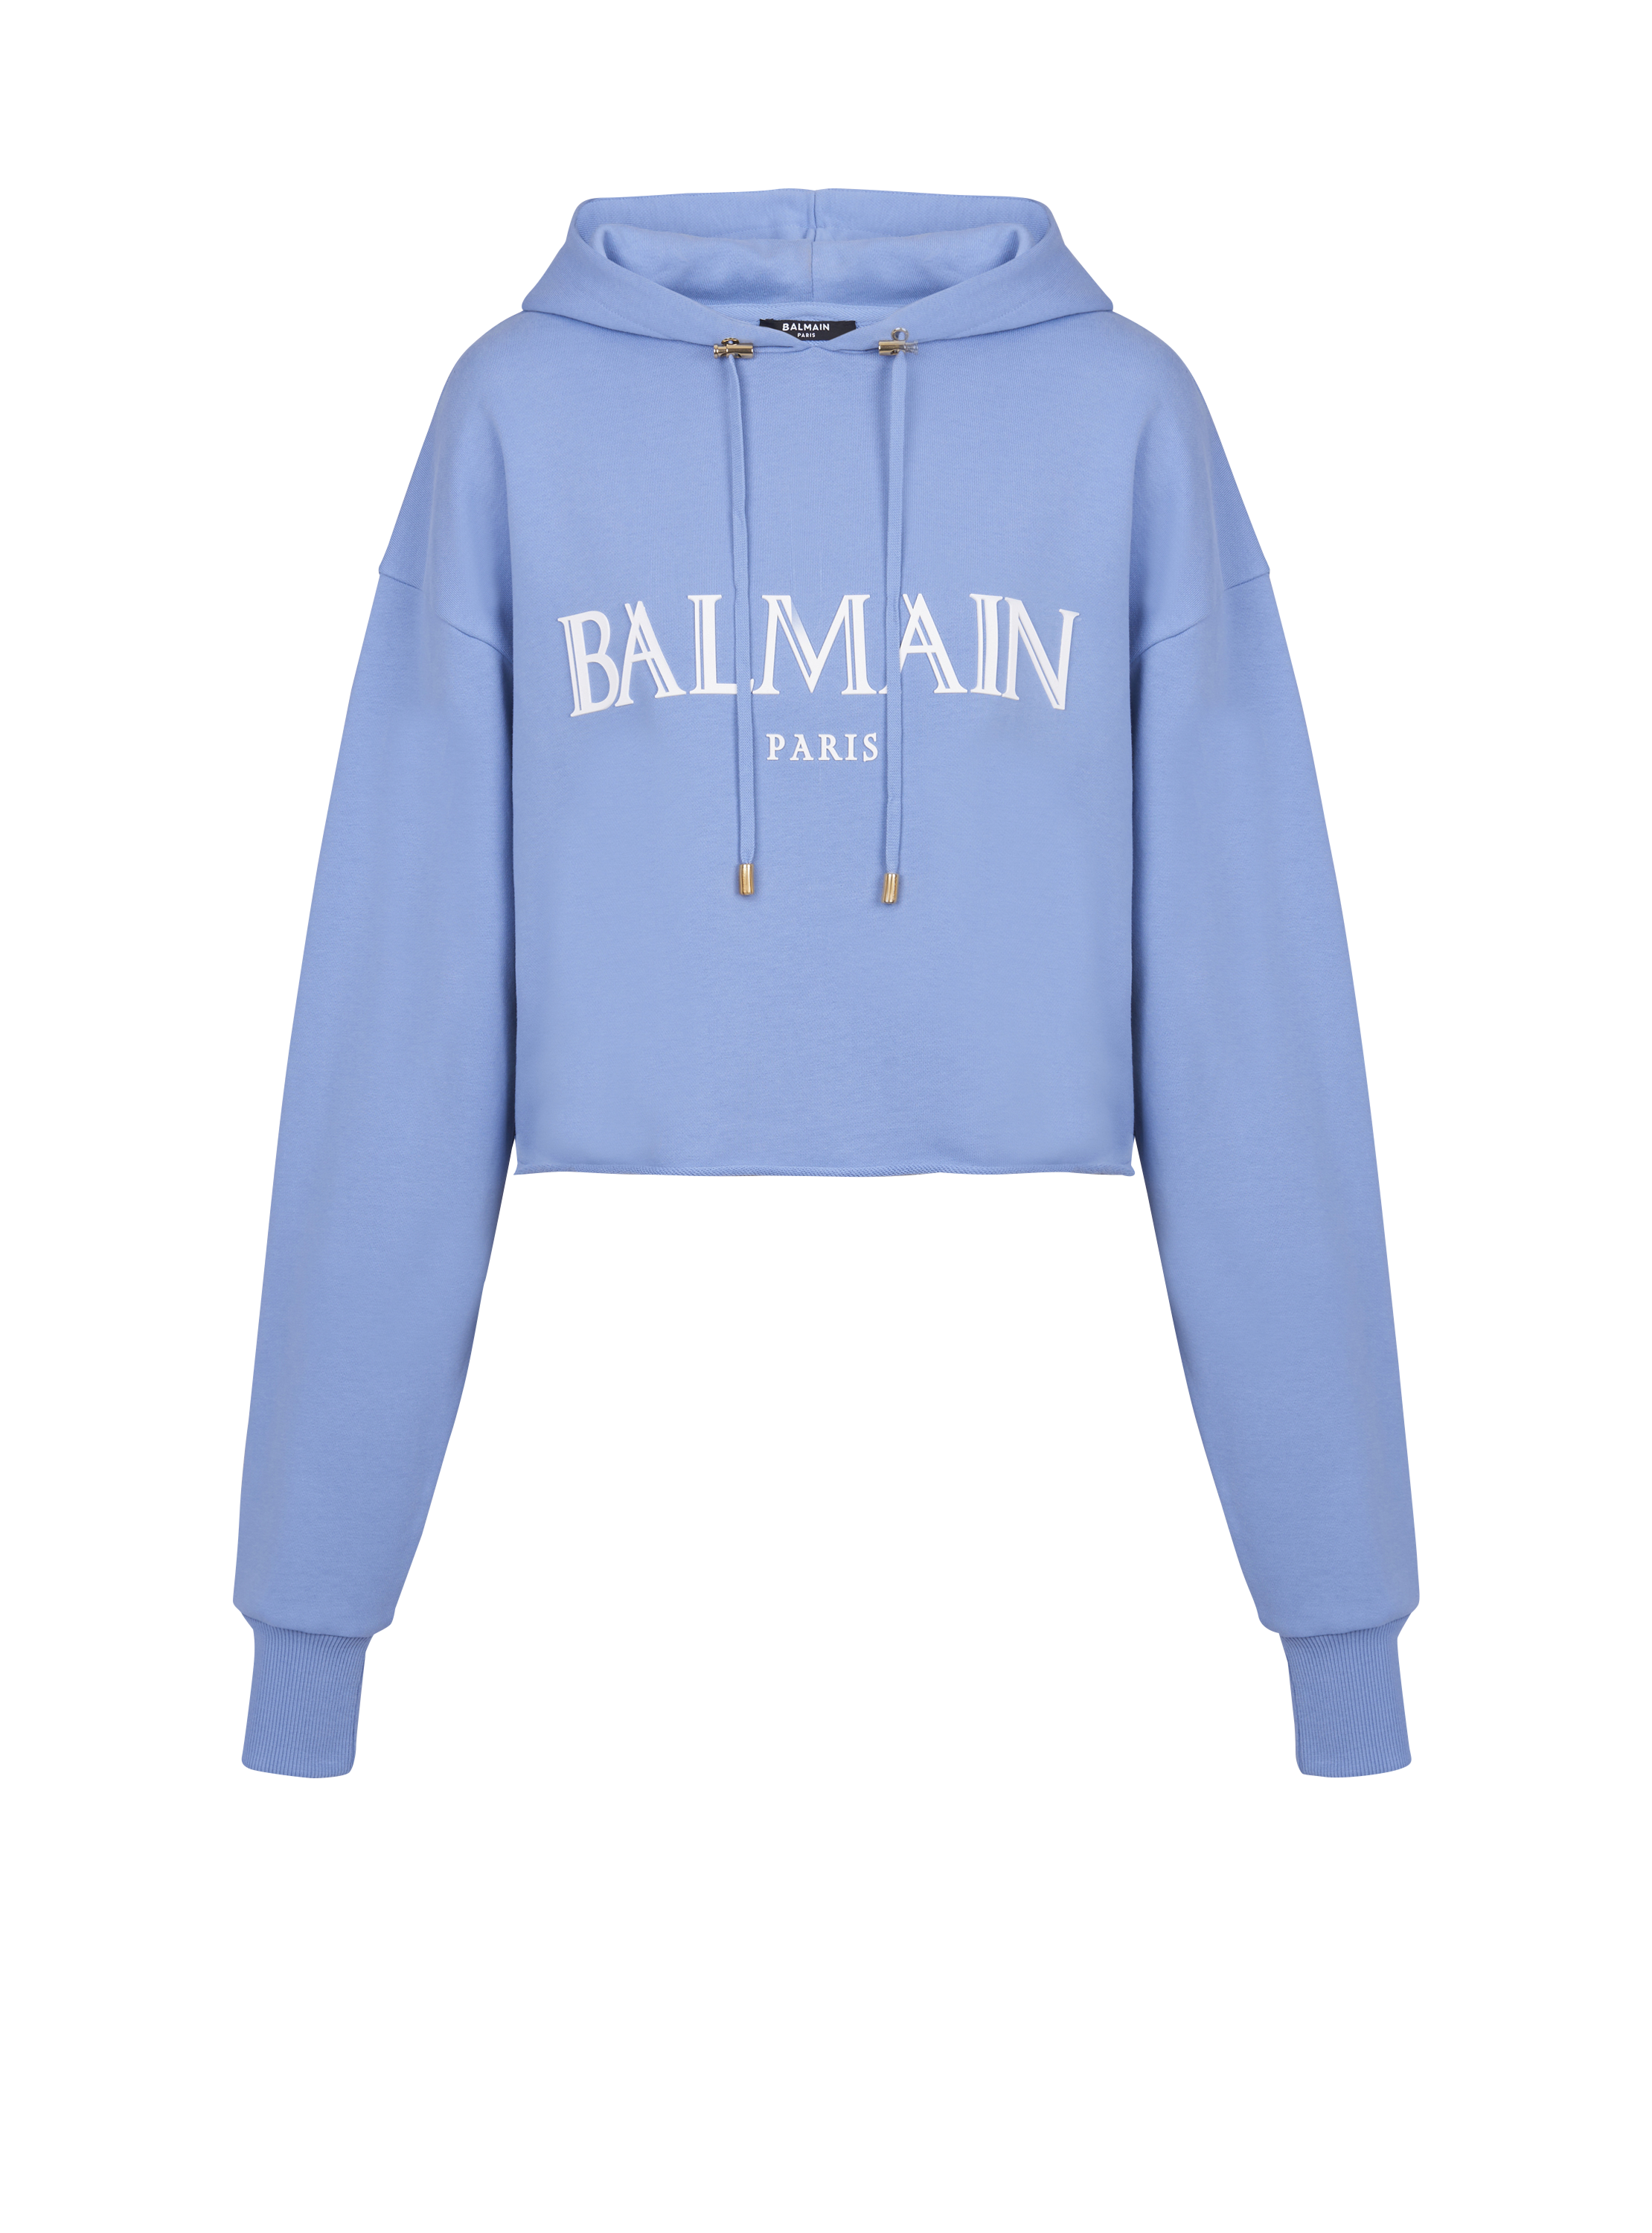 Cropped hoodie with rubber Roman Balmain logo